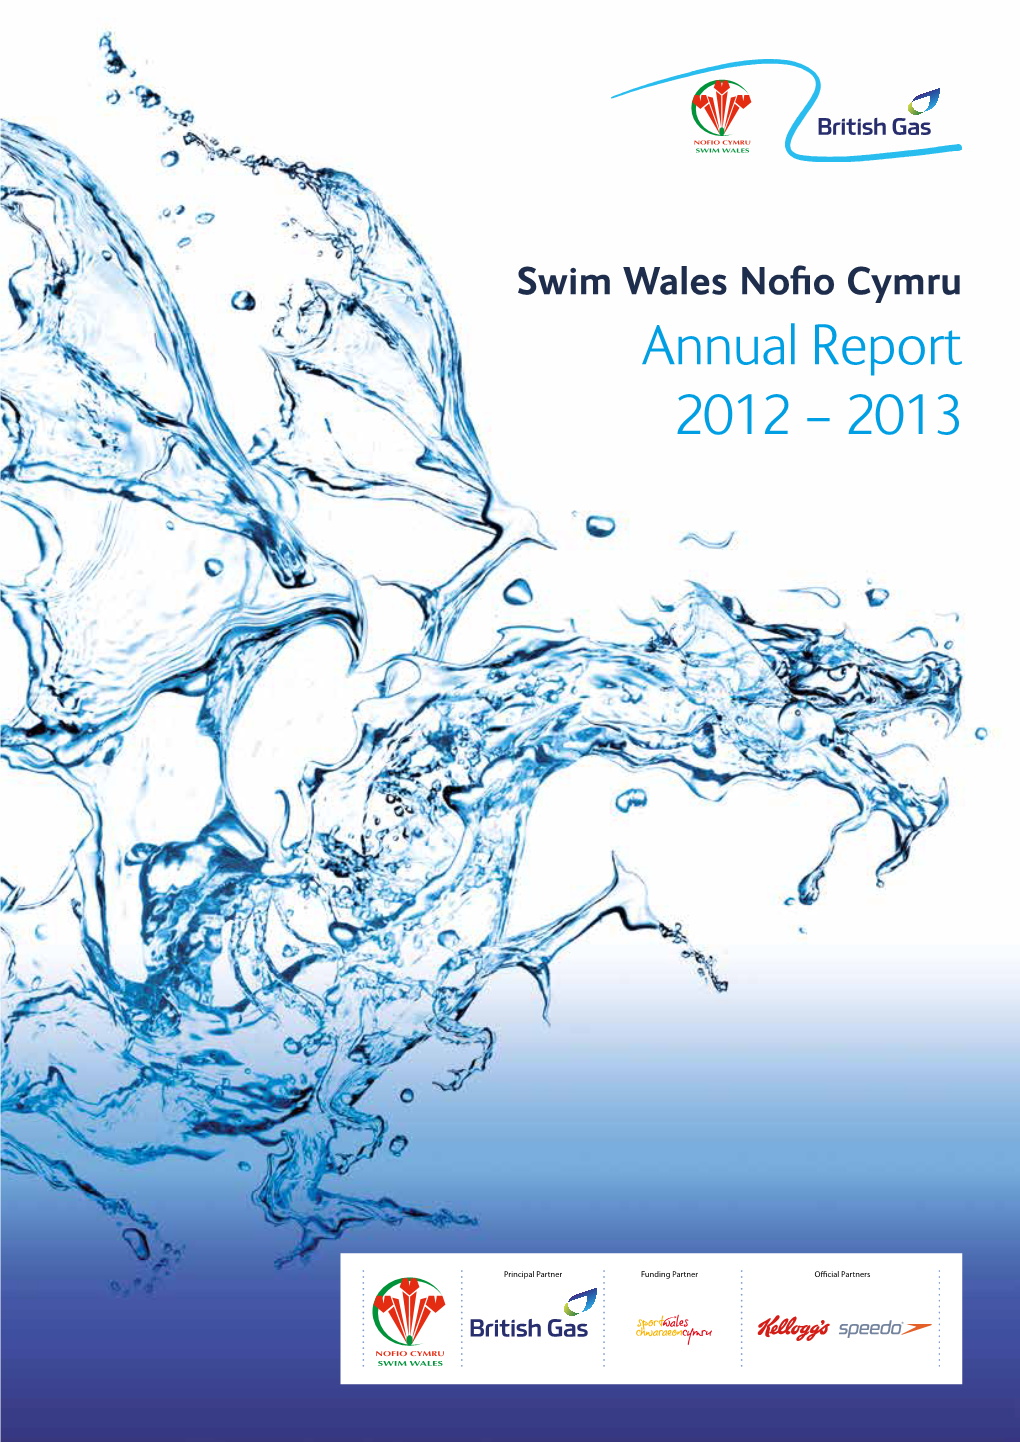 Annual Report 2012 - 2013